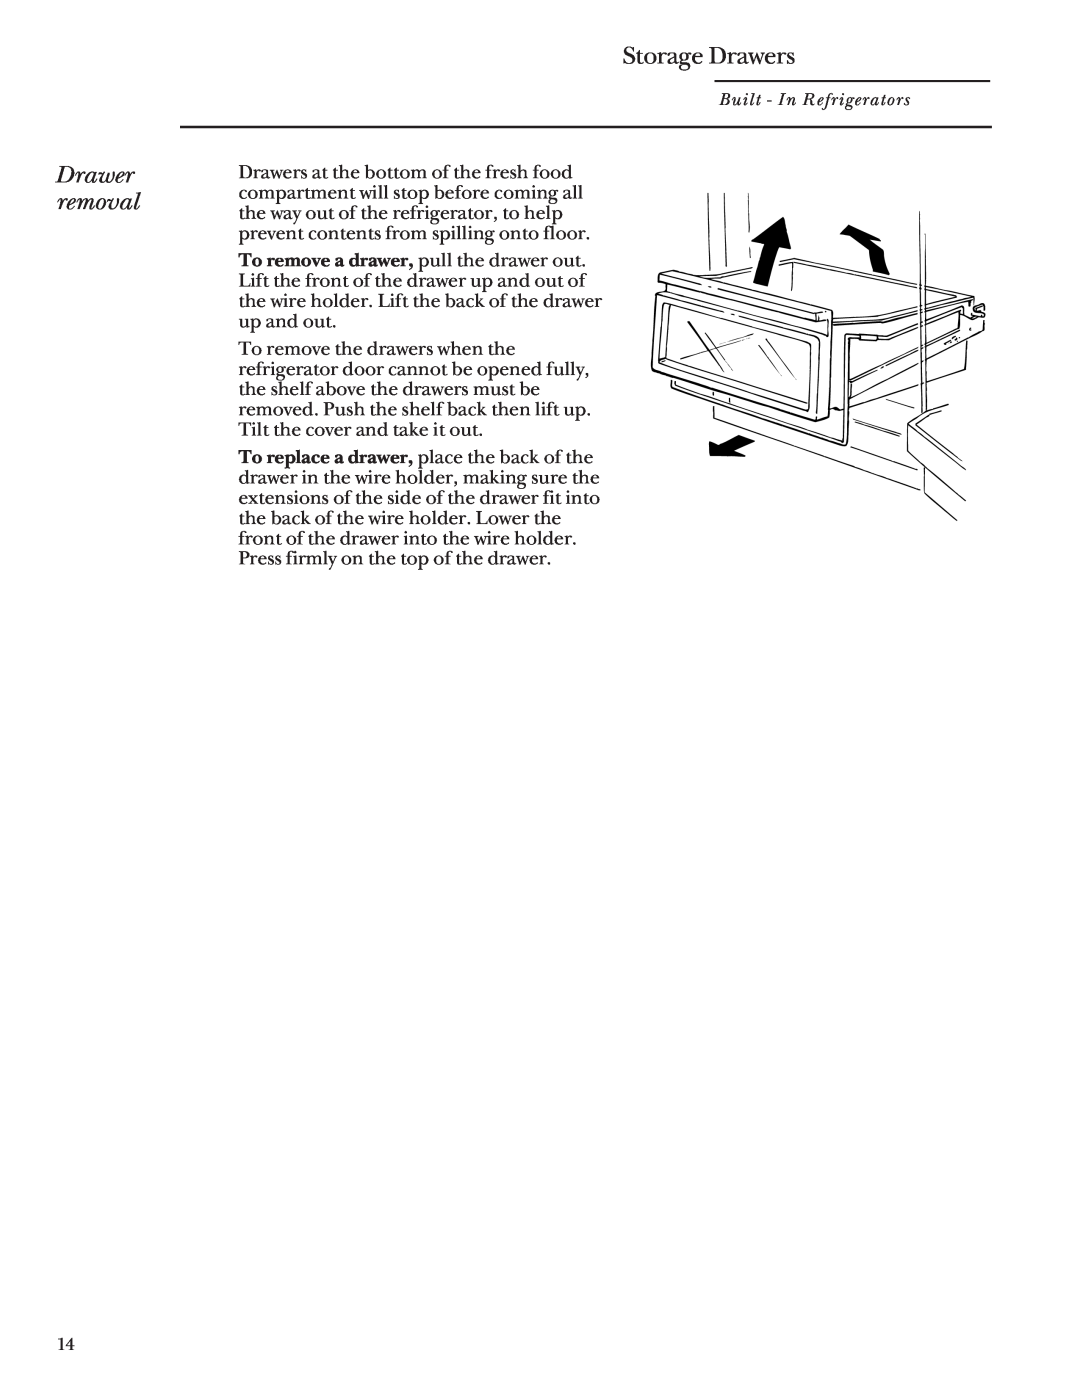 GE Monogram 48 Built-In Refrigerators manual Drawer removal, Storage Drawers 